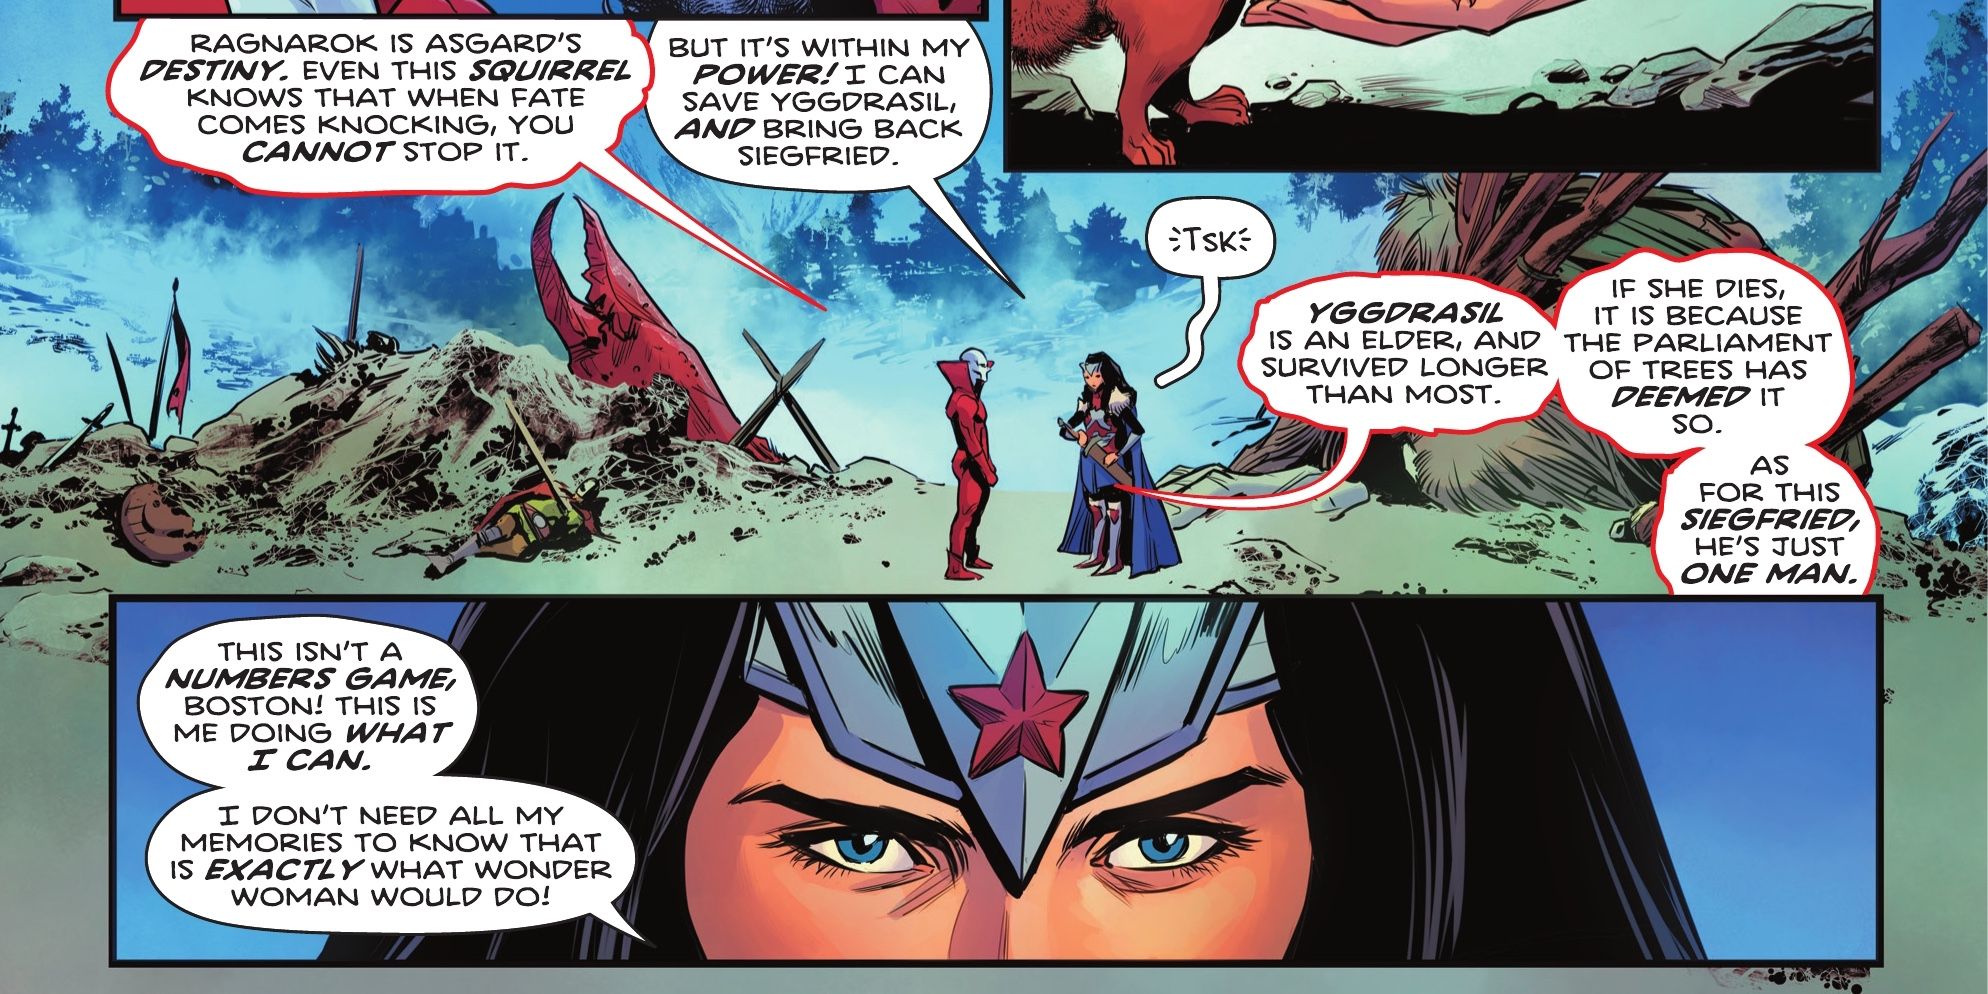 Wonder Woman wants to save Yggdrasil